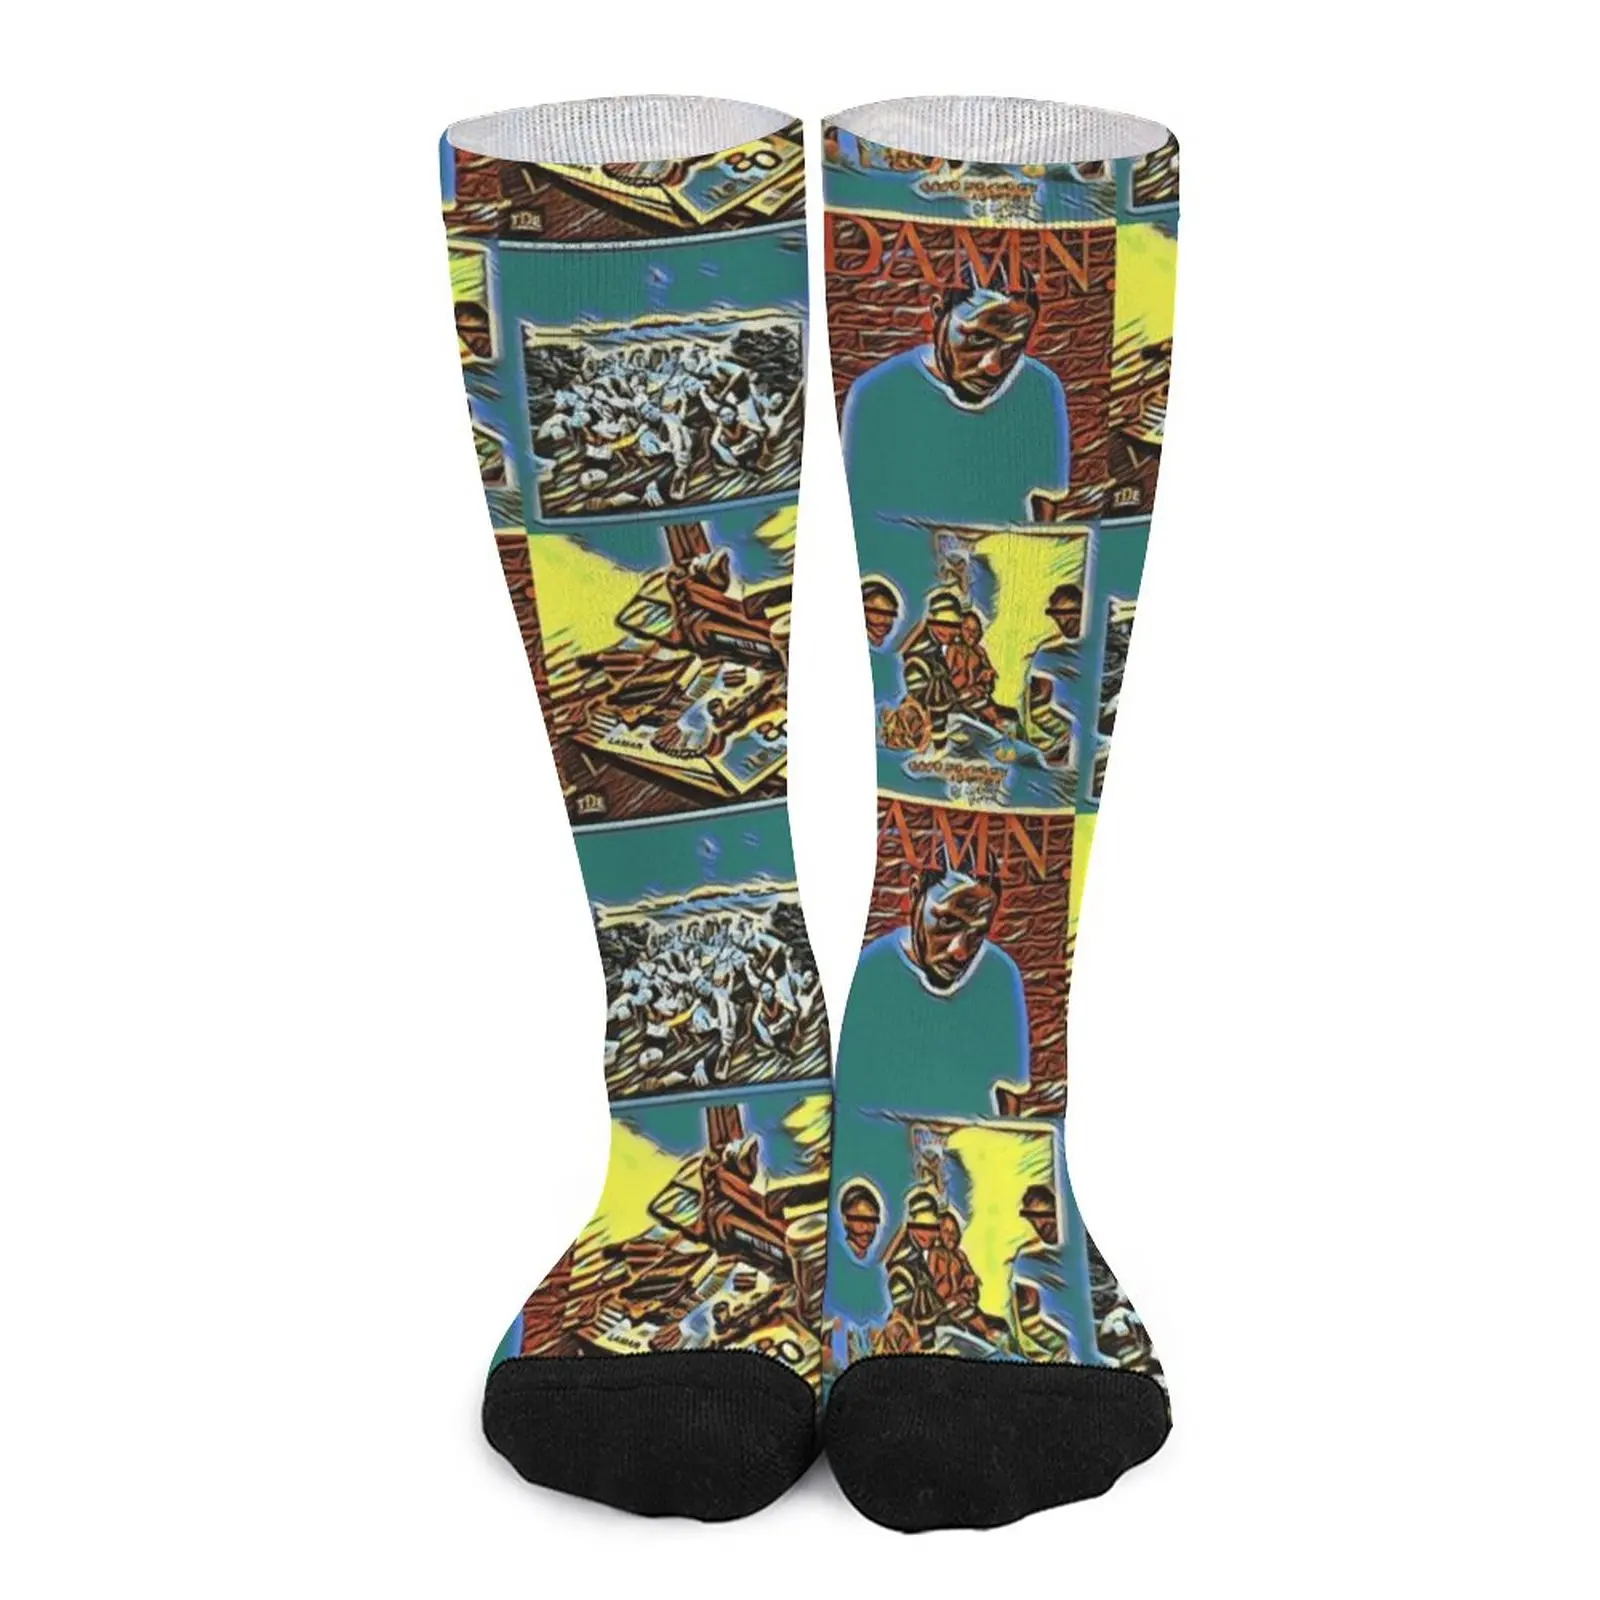 Kendrick Lamar Album Covers Van Gogh Socks Womens socks Women's compression sock kids socks